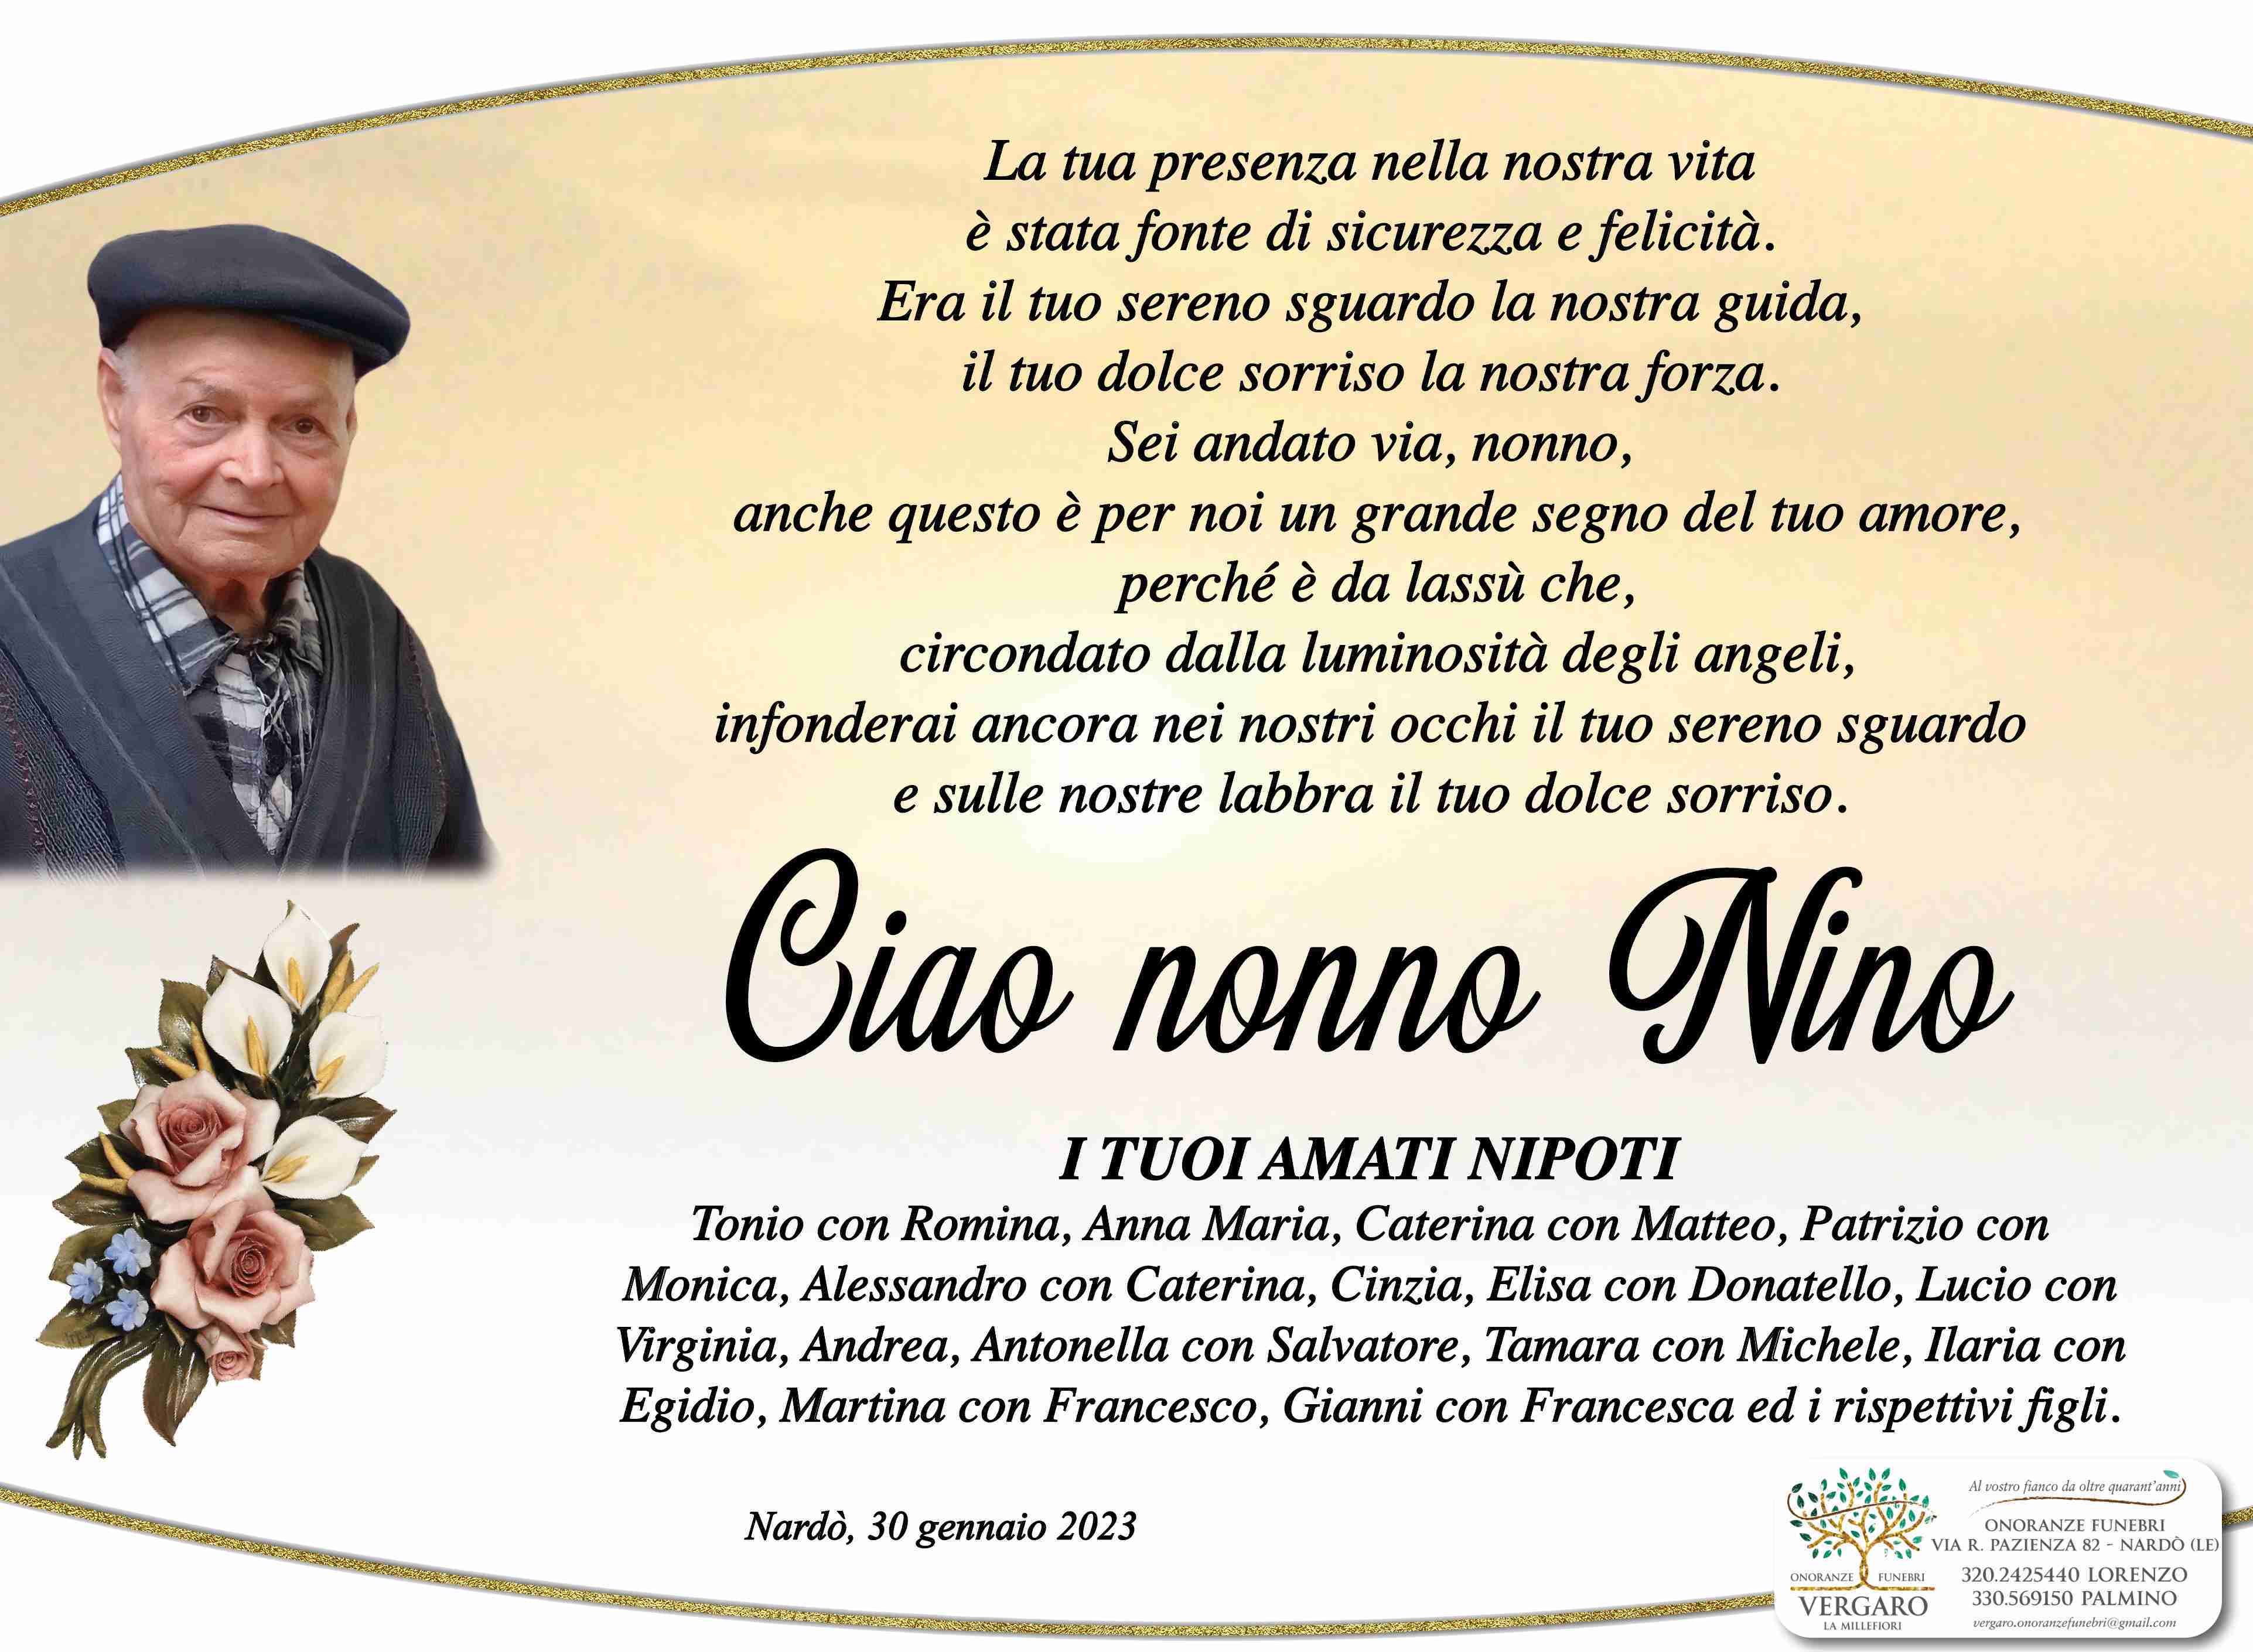 Nino Manca